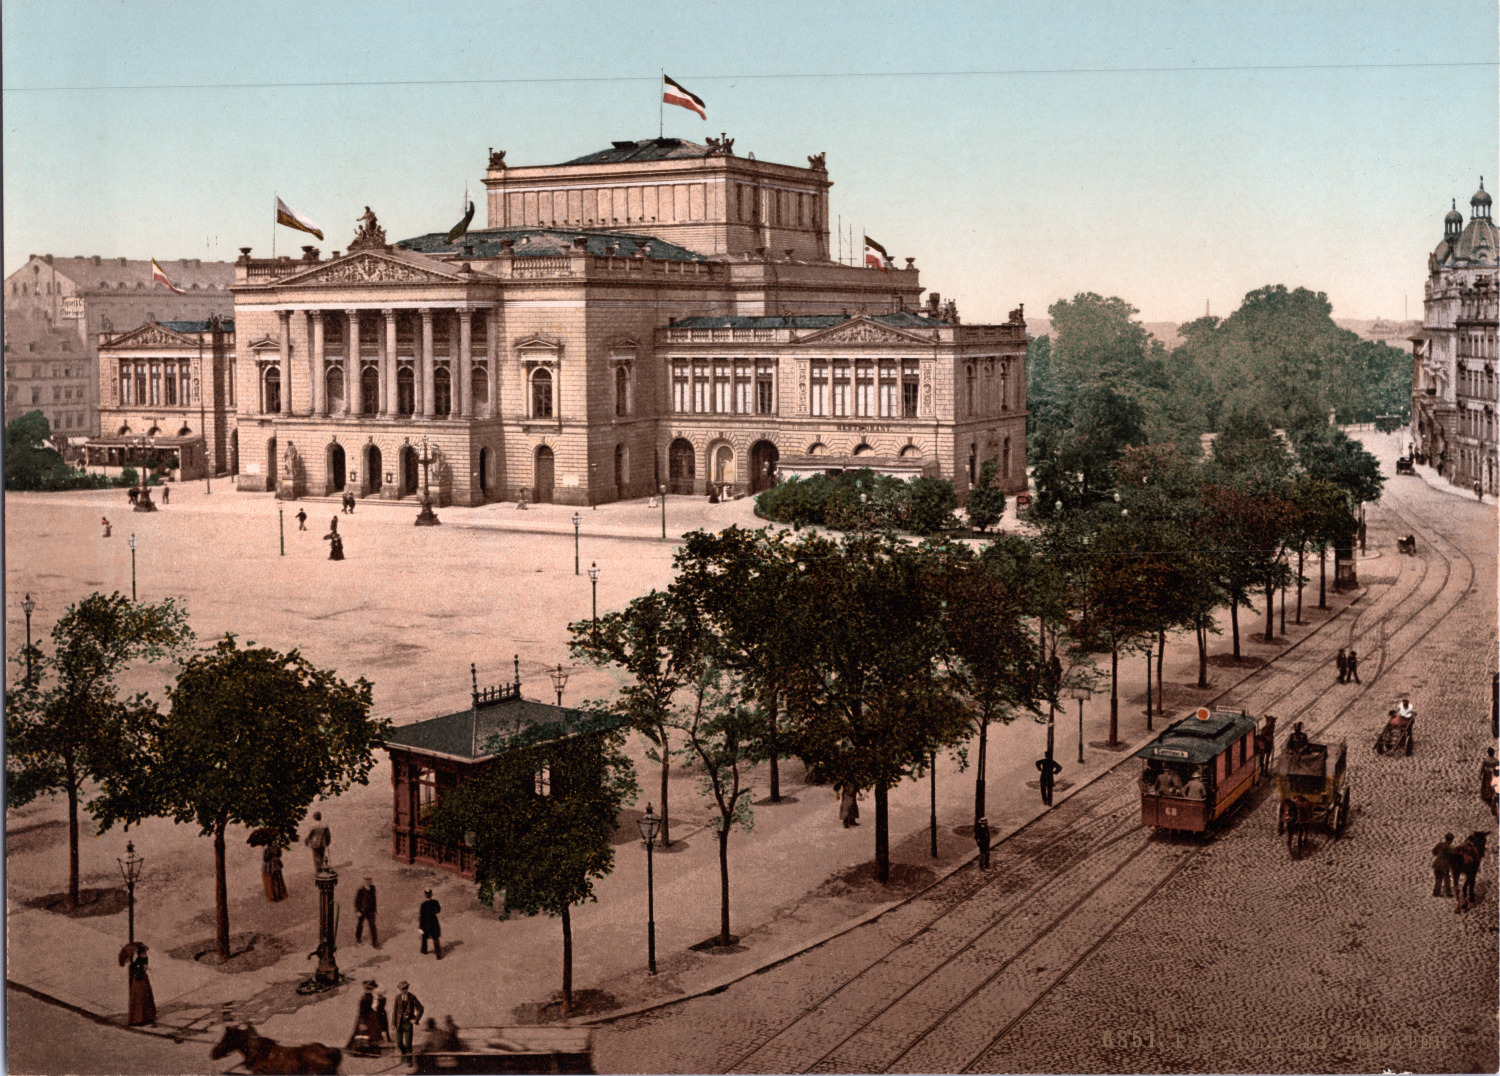 Germany, Leipzig. Augustus Platz with Theatre. vintage print photochrome, v